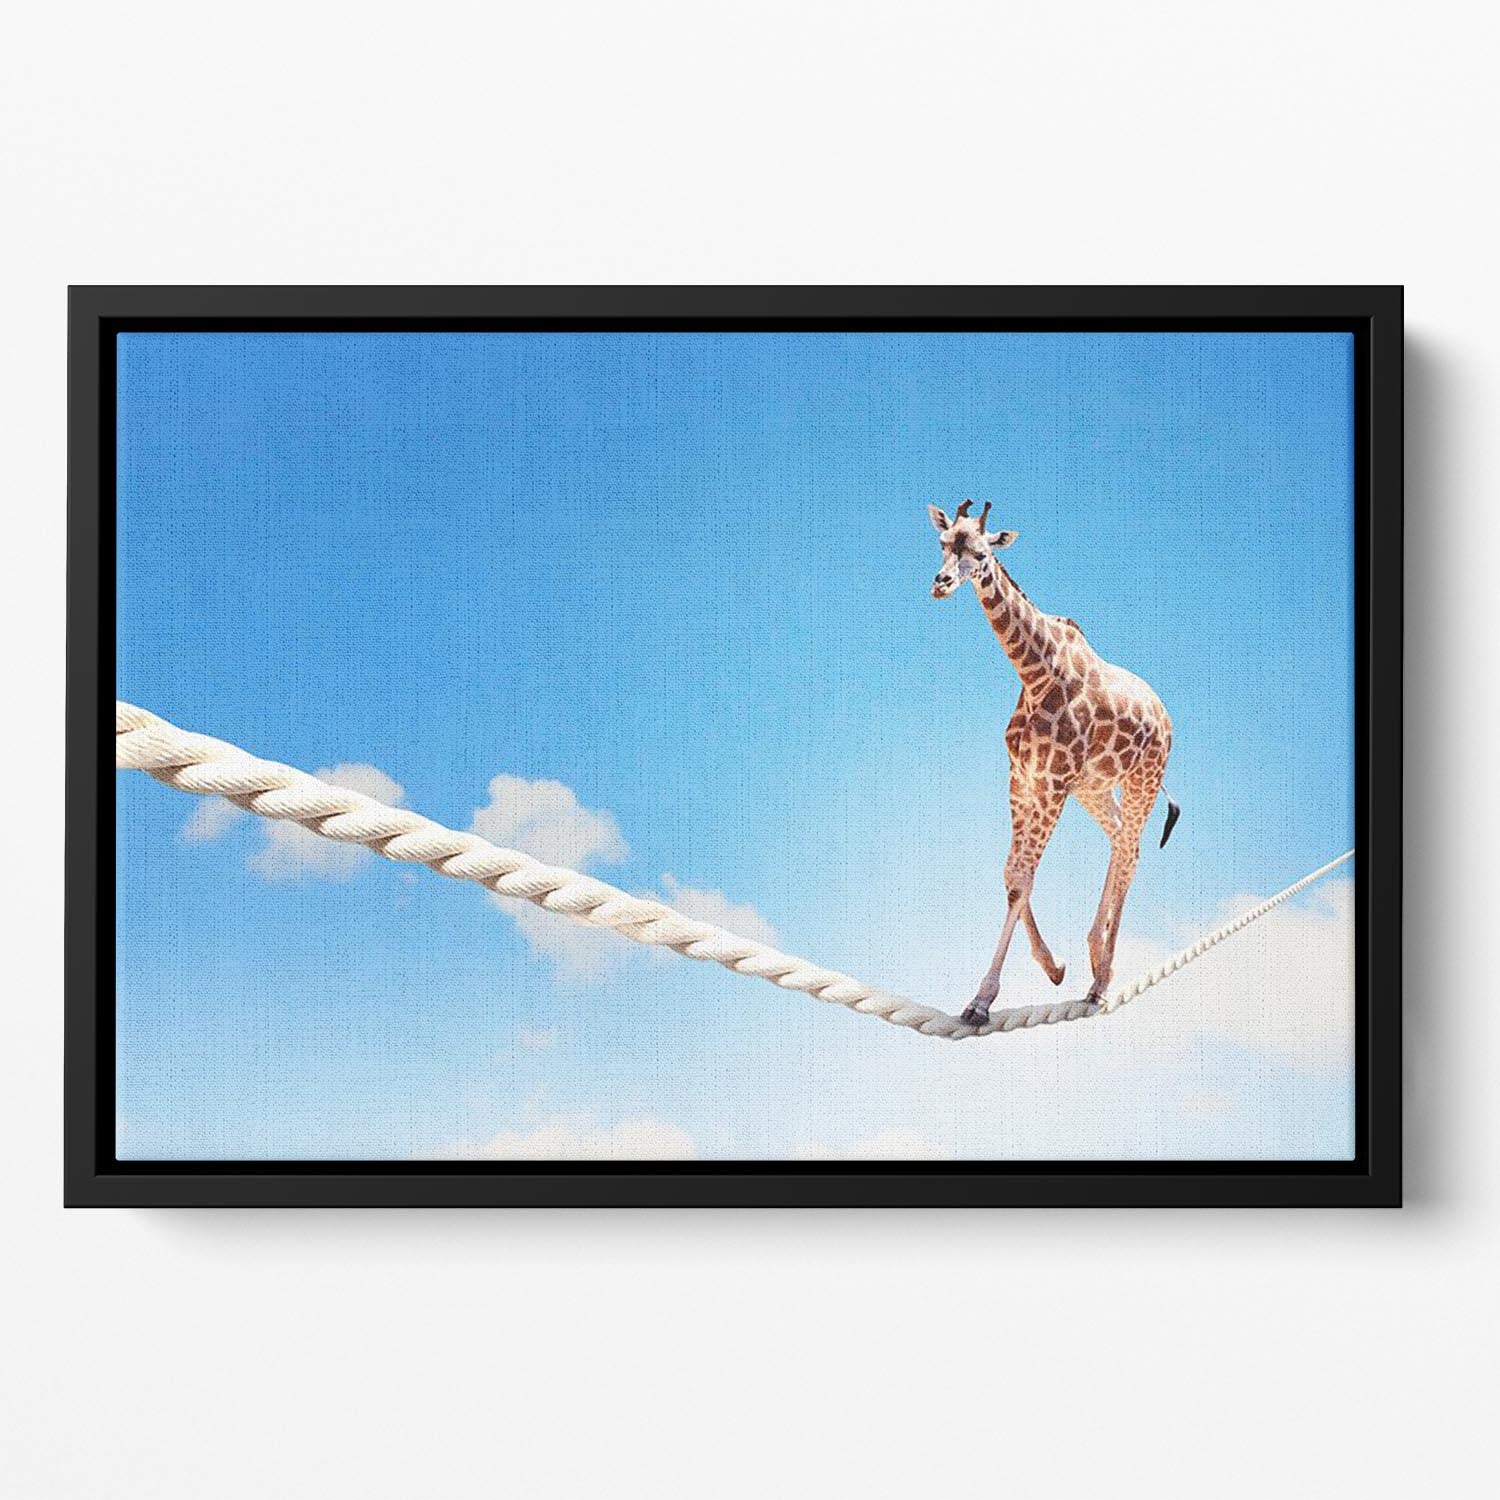 Image of giraffe walking on rope high in sky Floating Framed Canvas - Canvas Art Rocks - 2